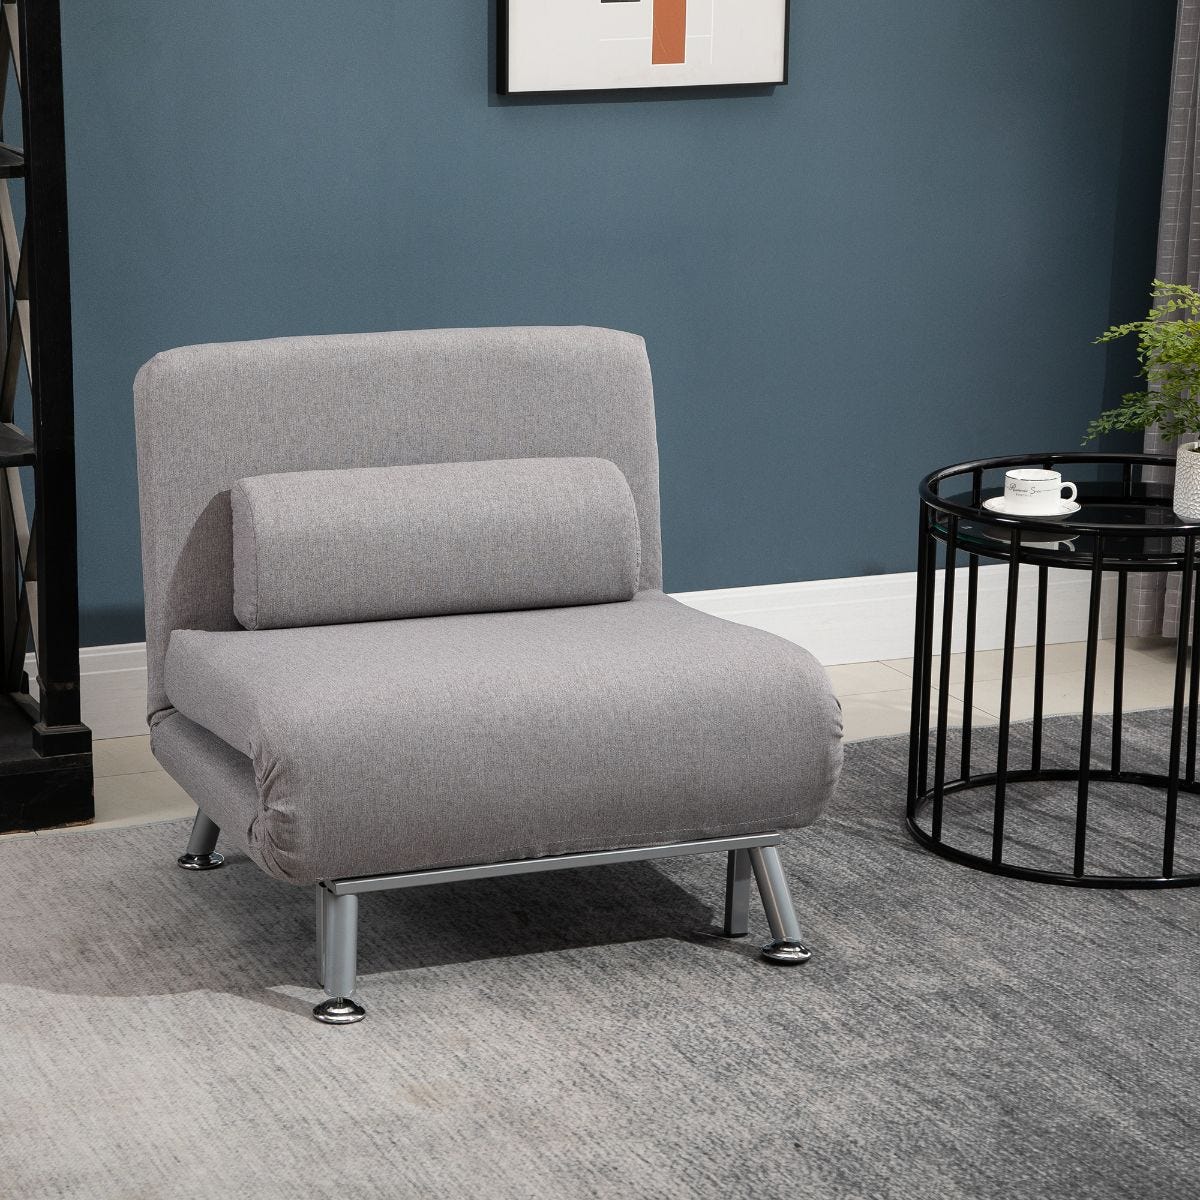 HOMCOM Single Folding 5 Position Steel Convertible Futon Sleeper Chair Sofa Bed Mid Grey